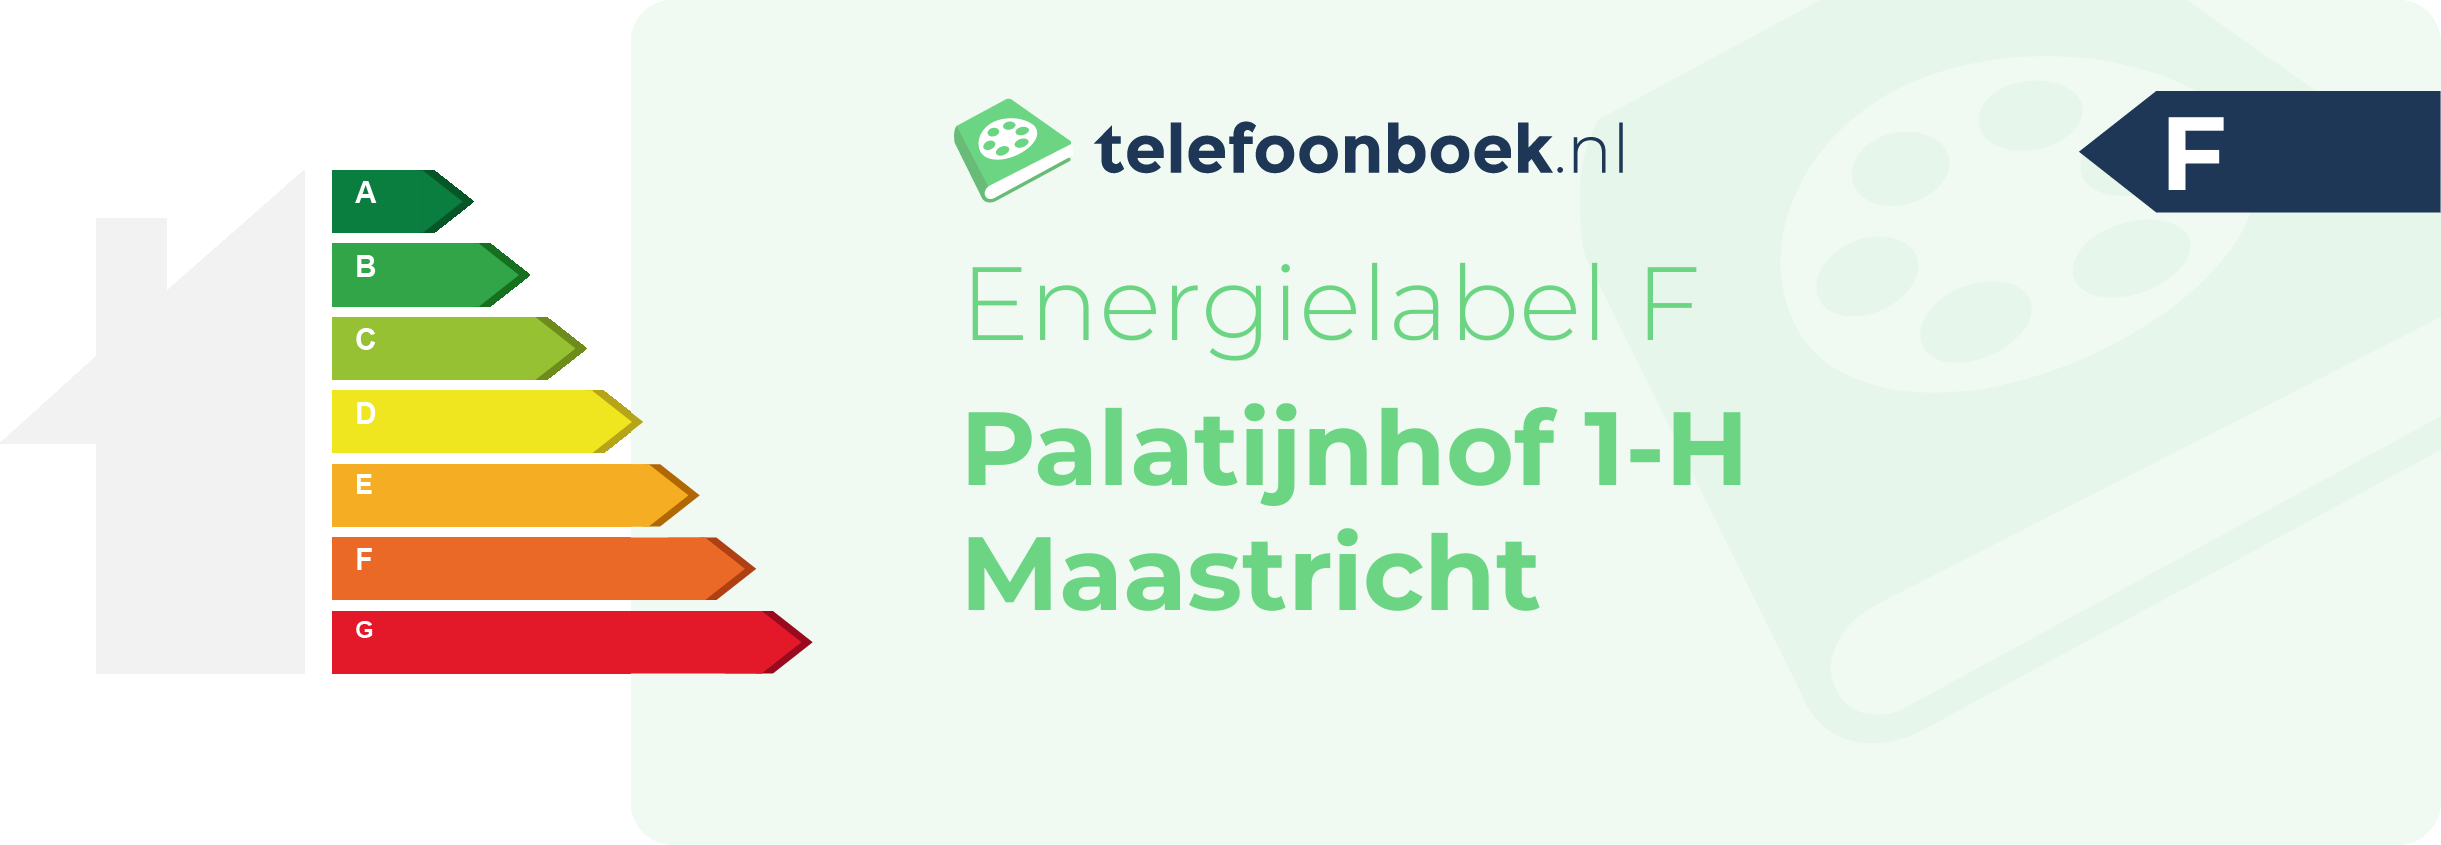 Energielabel Palatijnhof 1-H Maastricht